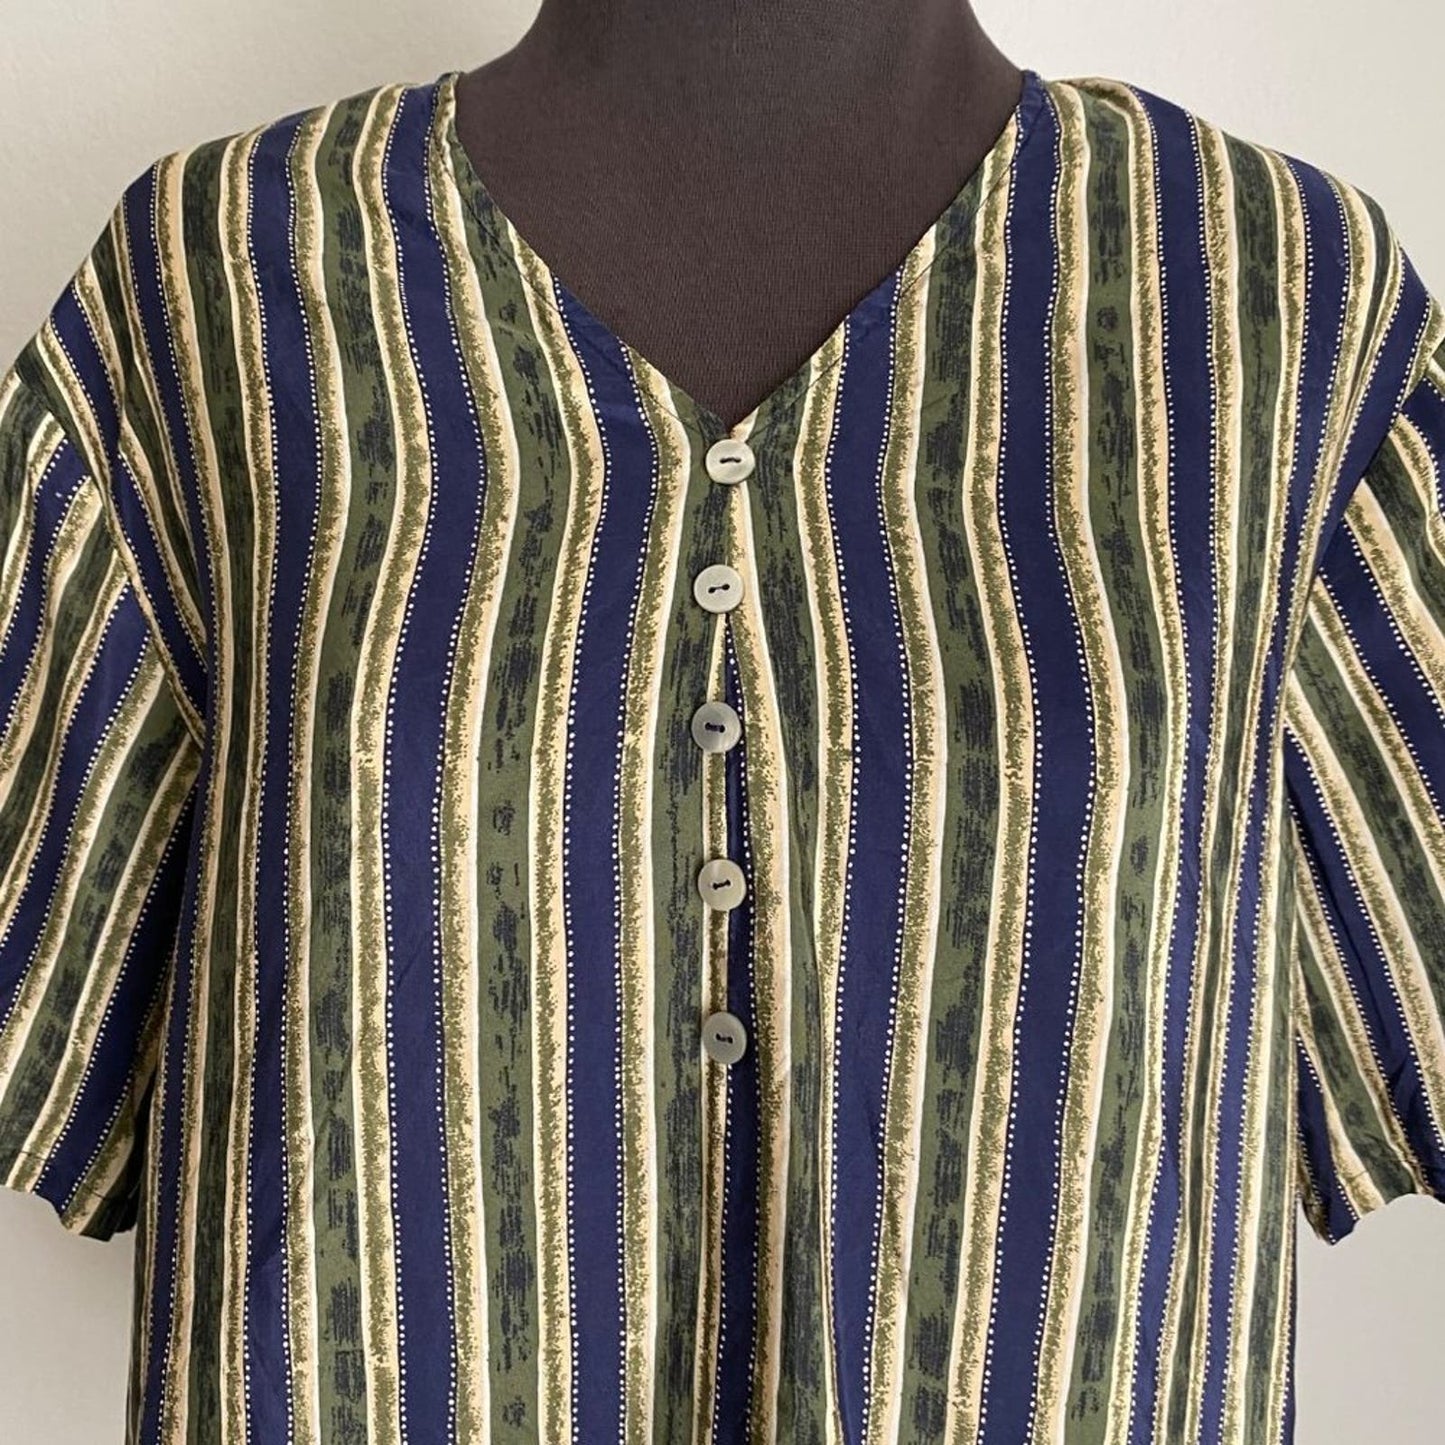 Melrose Studio sz M striped boho shirt blouse